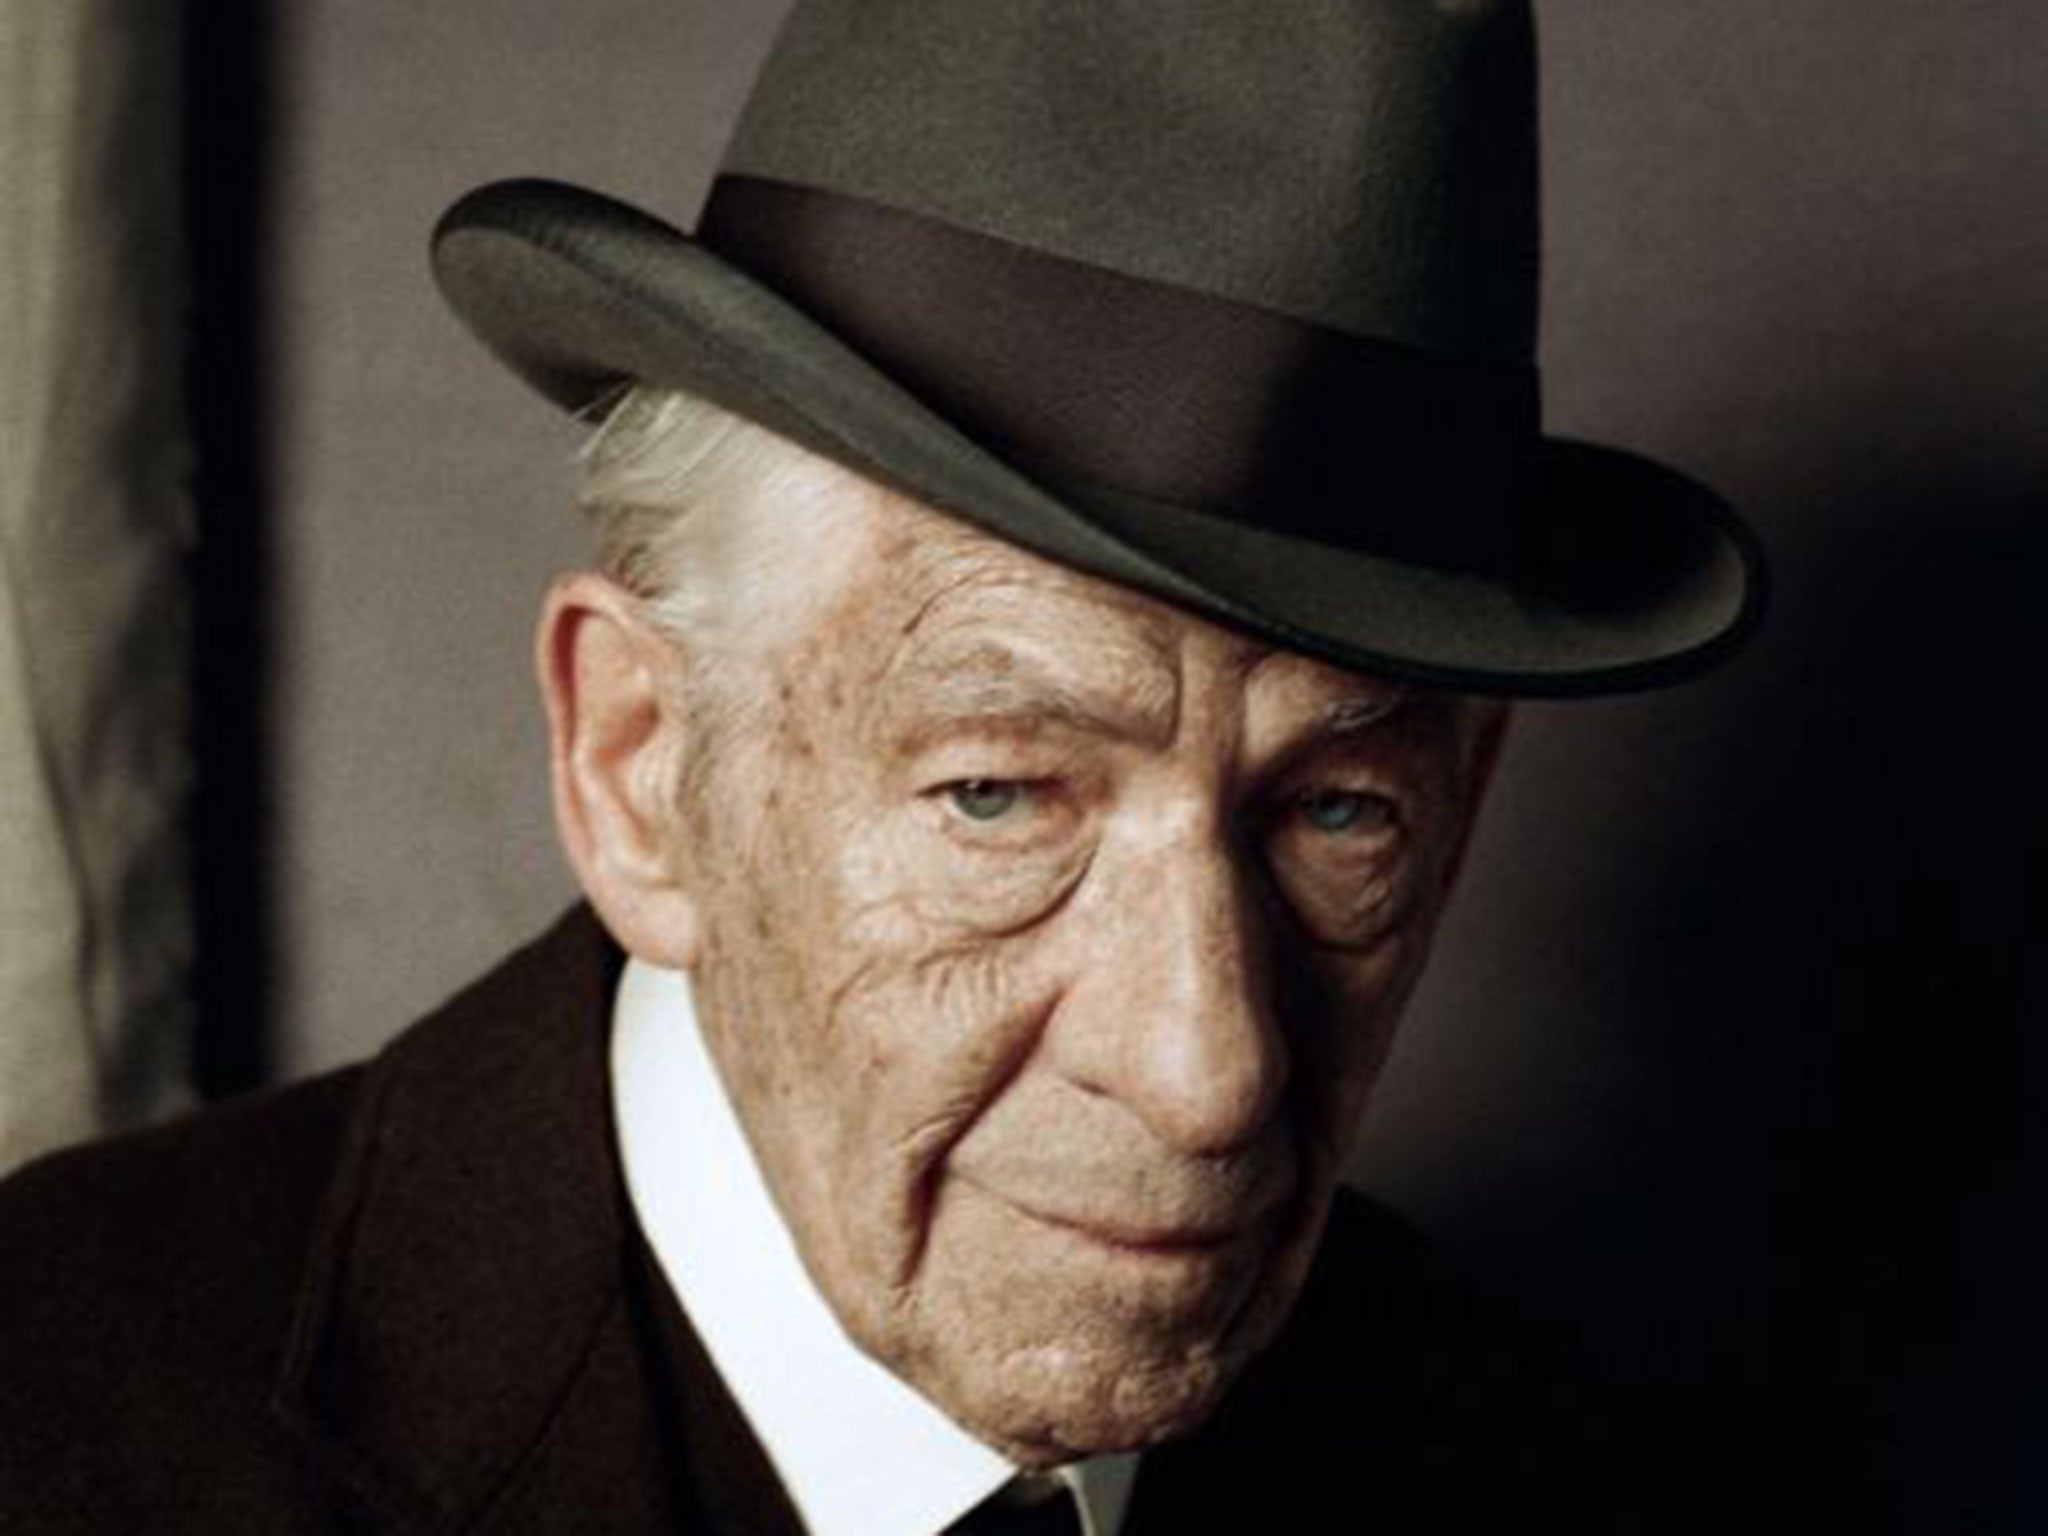 Sir Ian McKellen as Sherlock Holmes in detective movie Mr Holmes